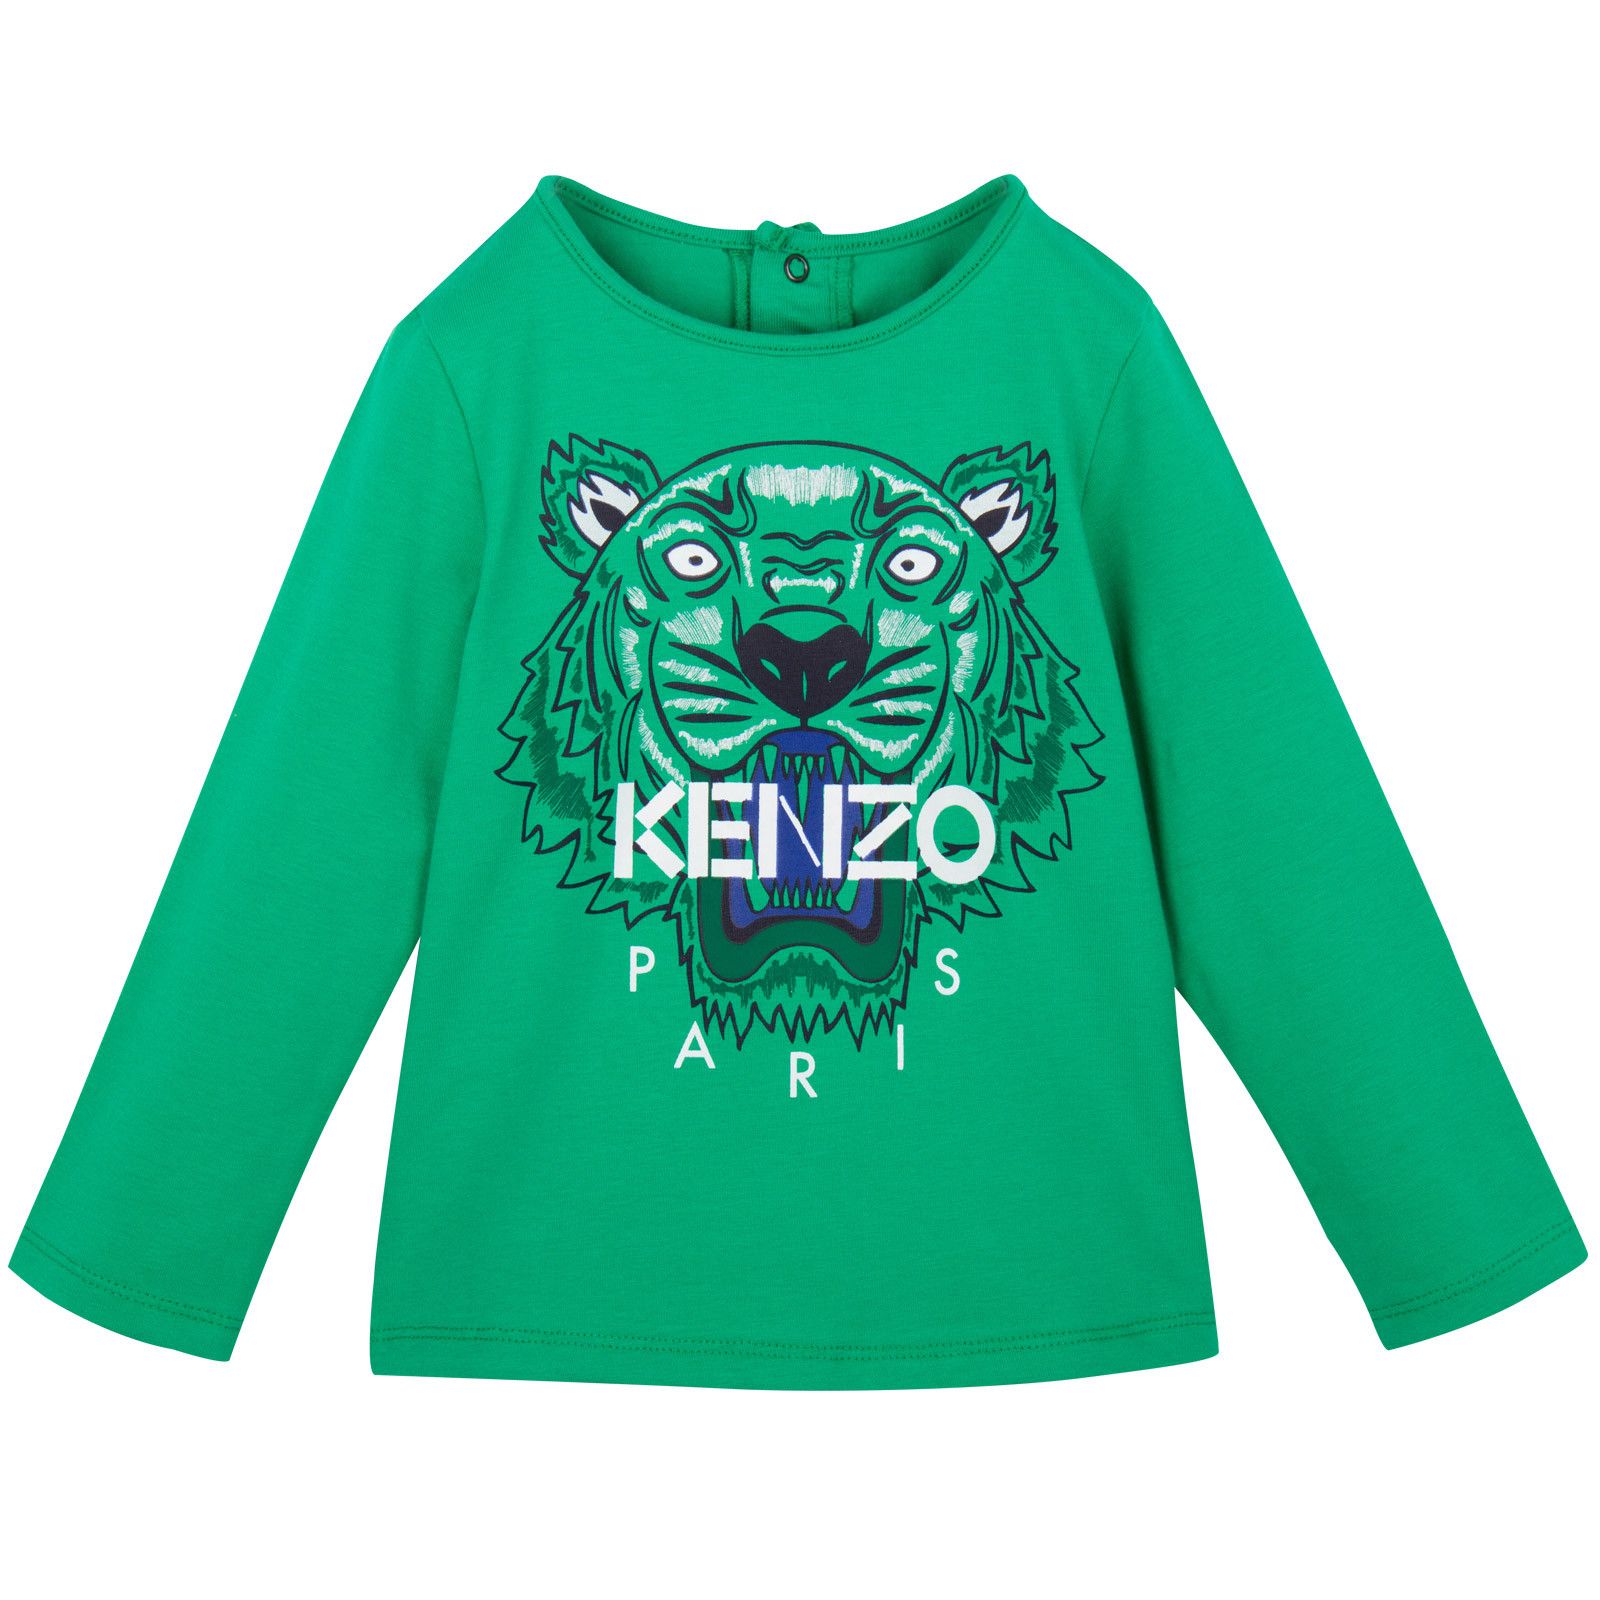 Baby Green Tiger Printed Cotton T-Shirt - CÉMAROSE | Children's Fashion Store - 1